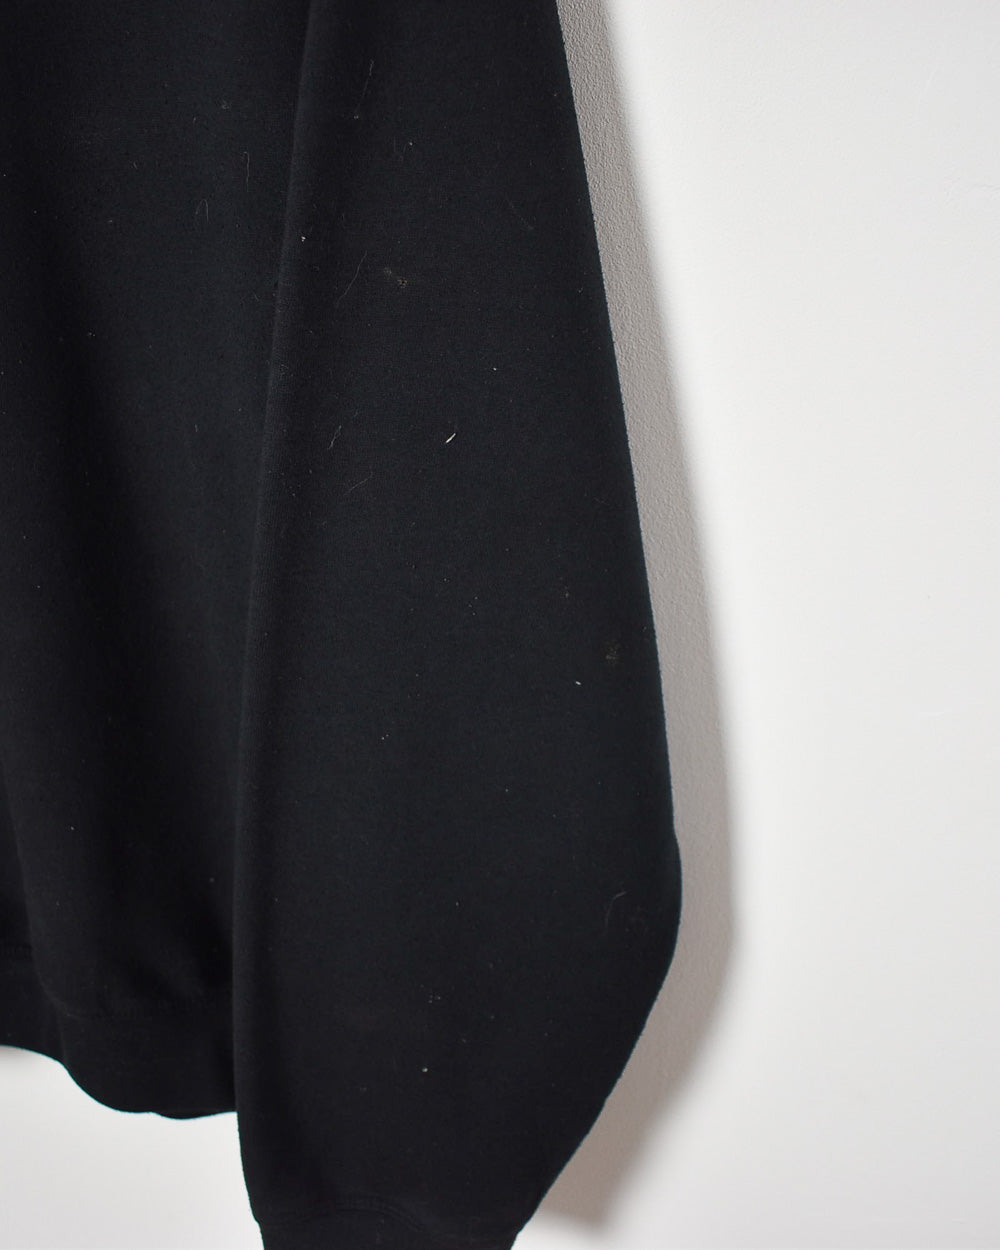 Black Reebok Sweatshirt - X-Large